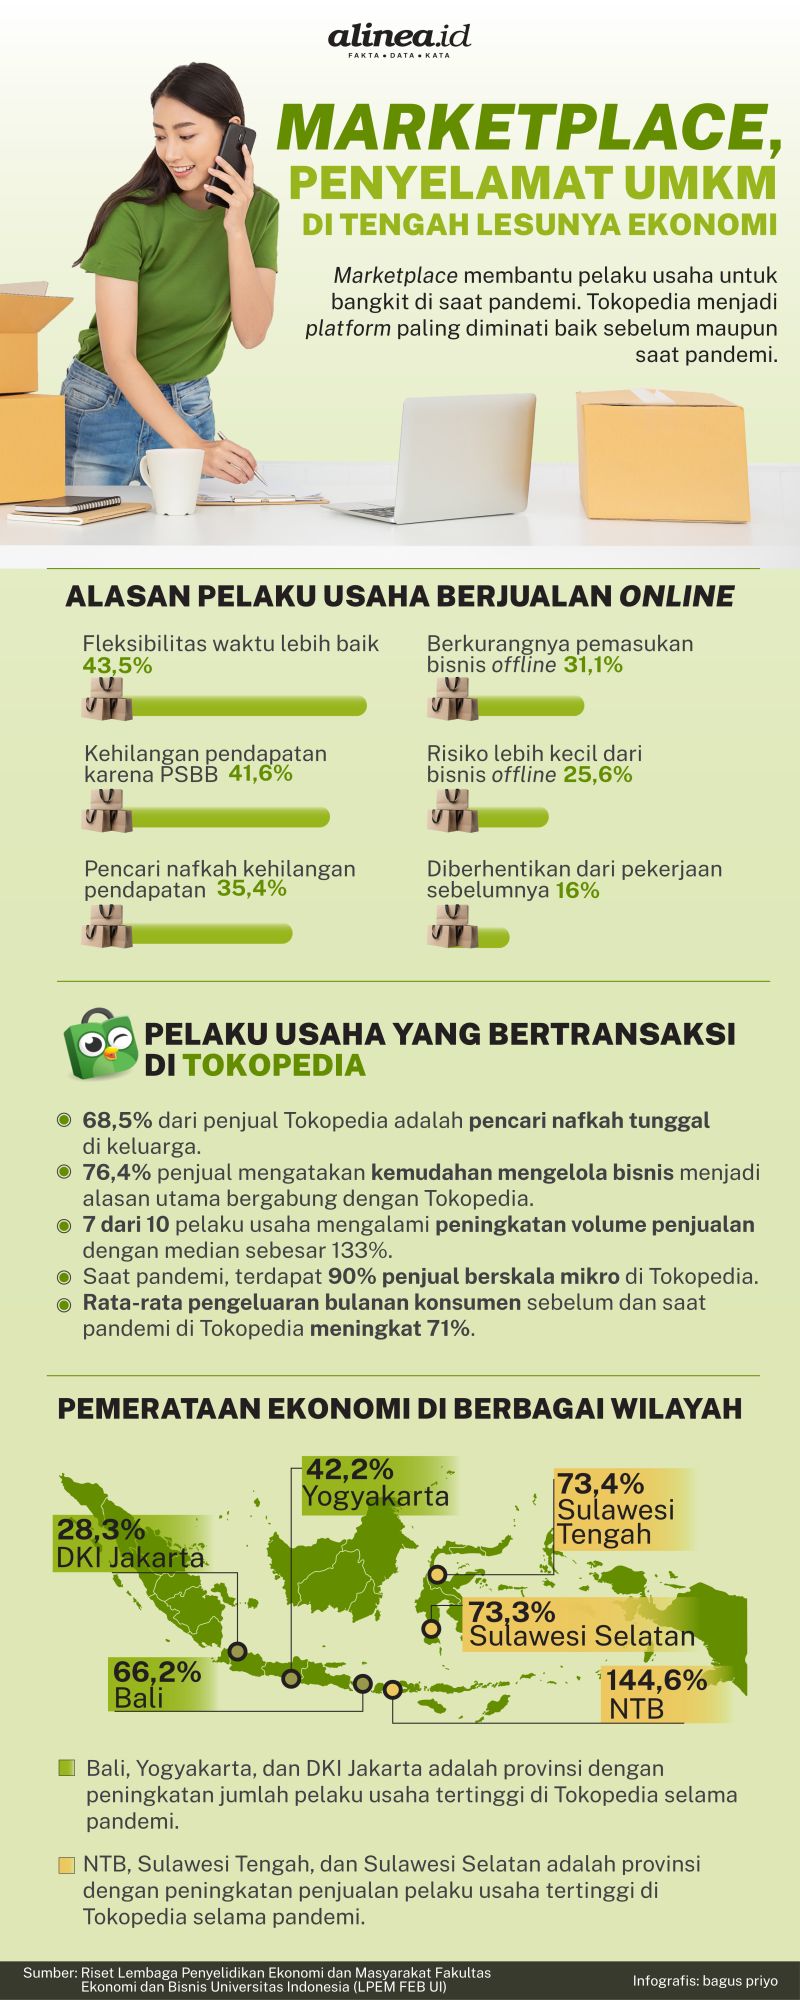 Marketplace menjadi penyelamat ekonomi bangsa. Infografik Alinea.id/Bagus Priyo.